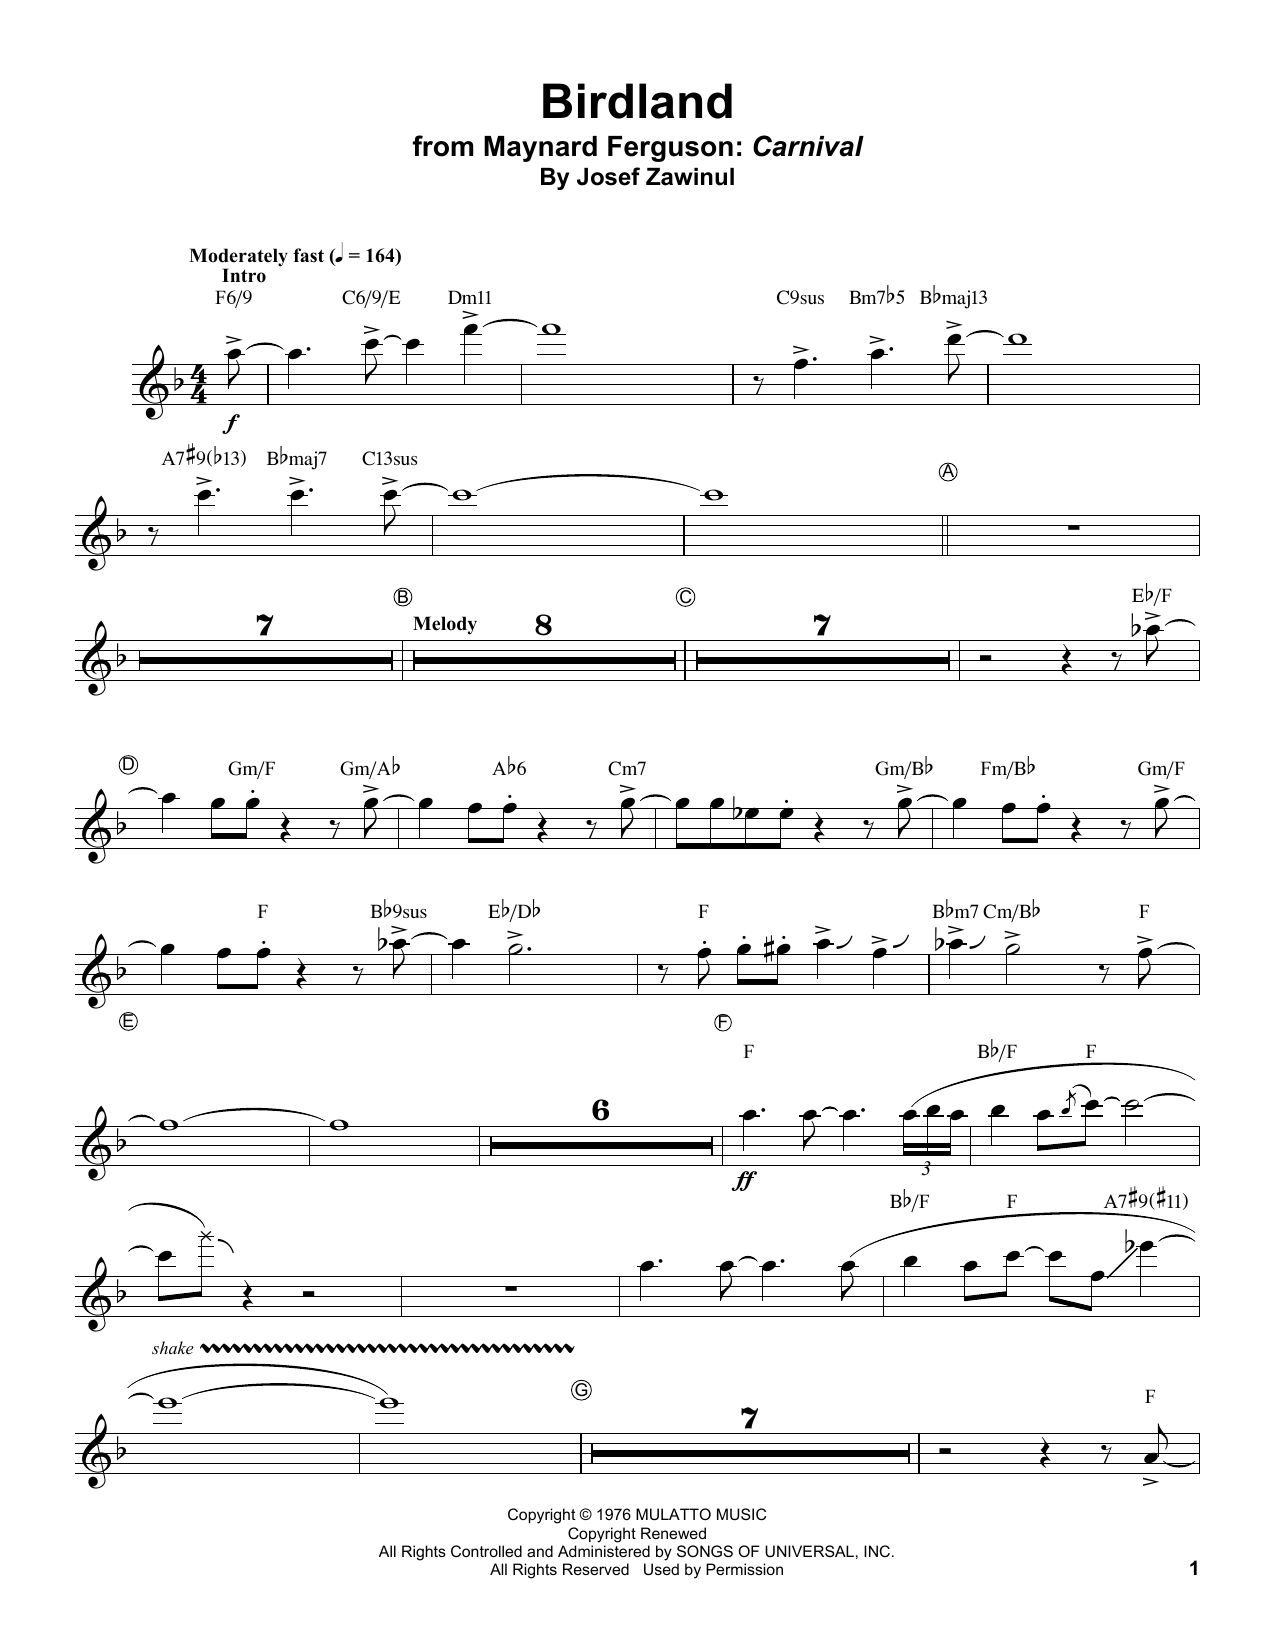 Maynard Ferguson Birdland Sheet Music Notes & Chords for Trumpet Transcription - Download or Print PDF